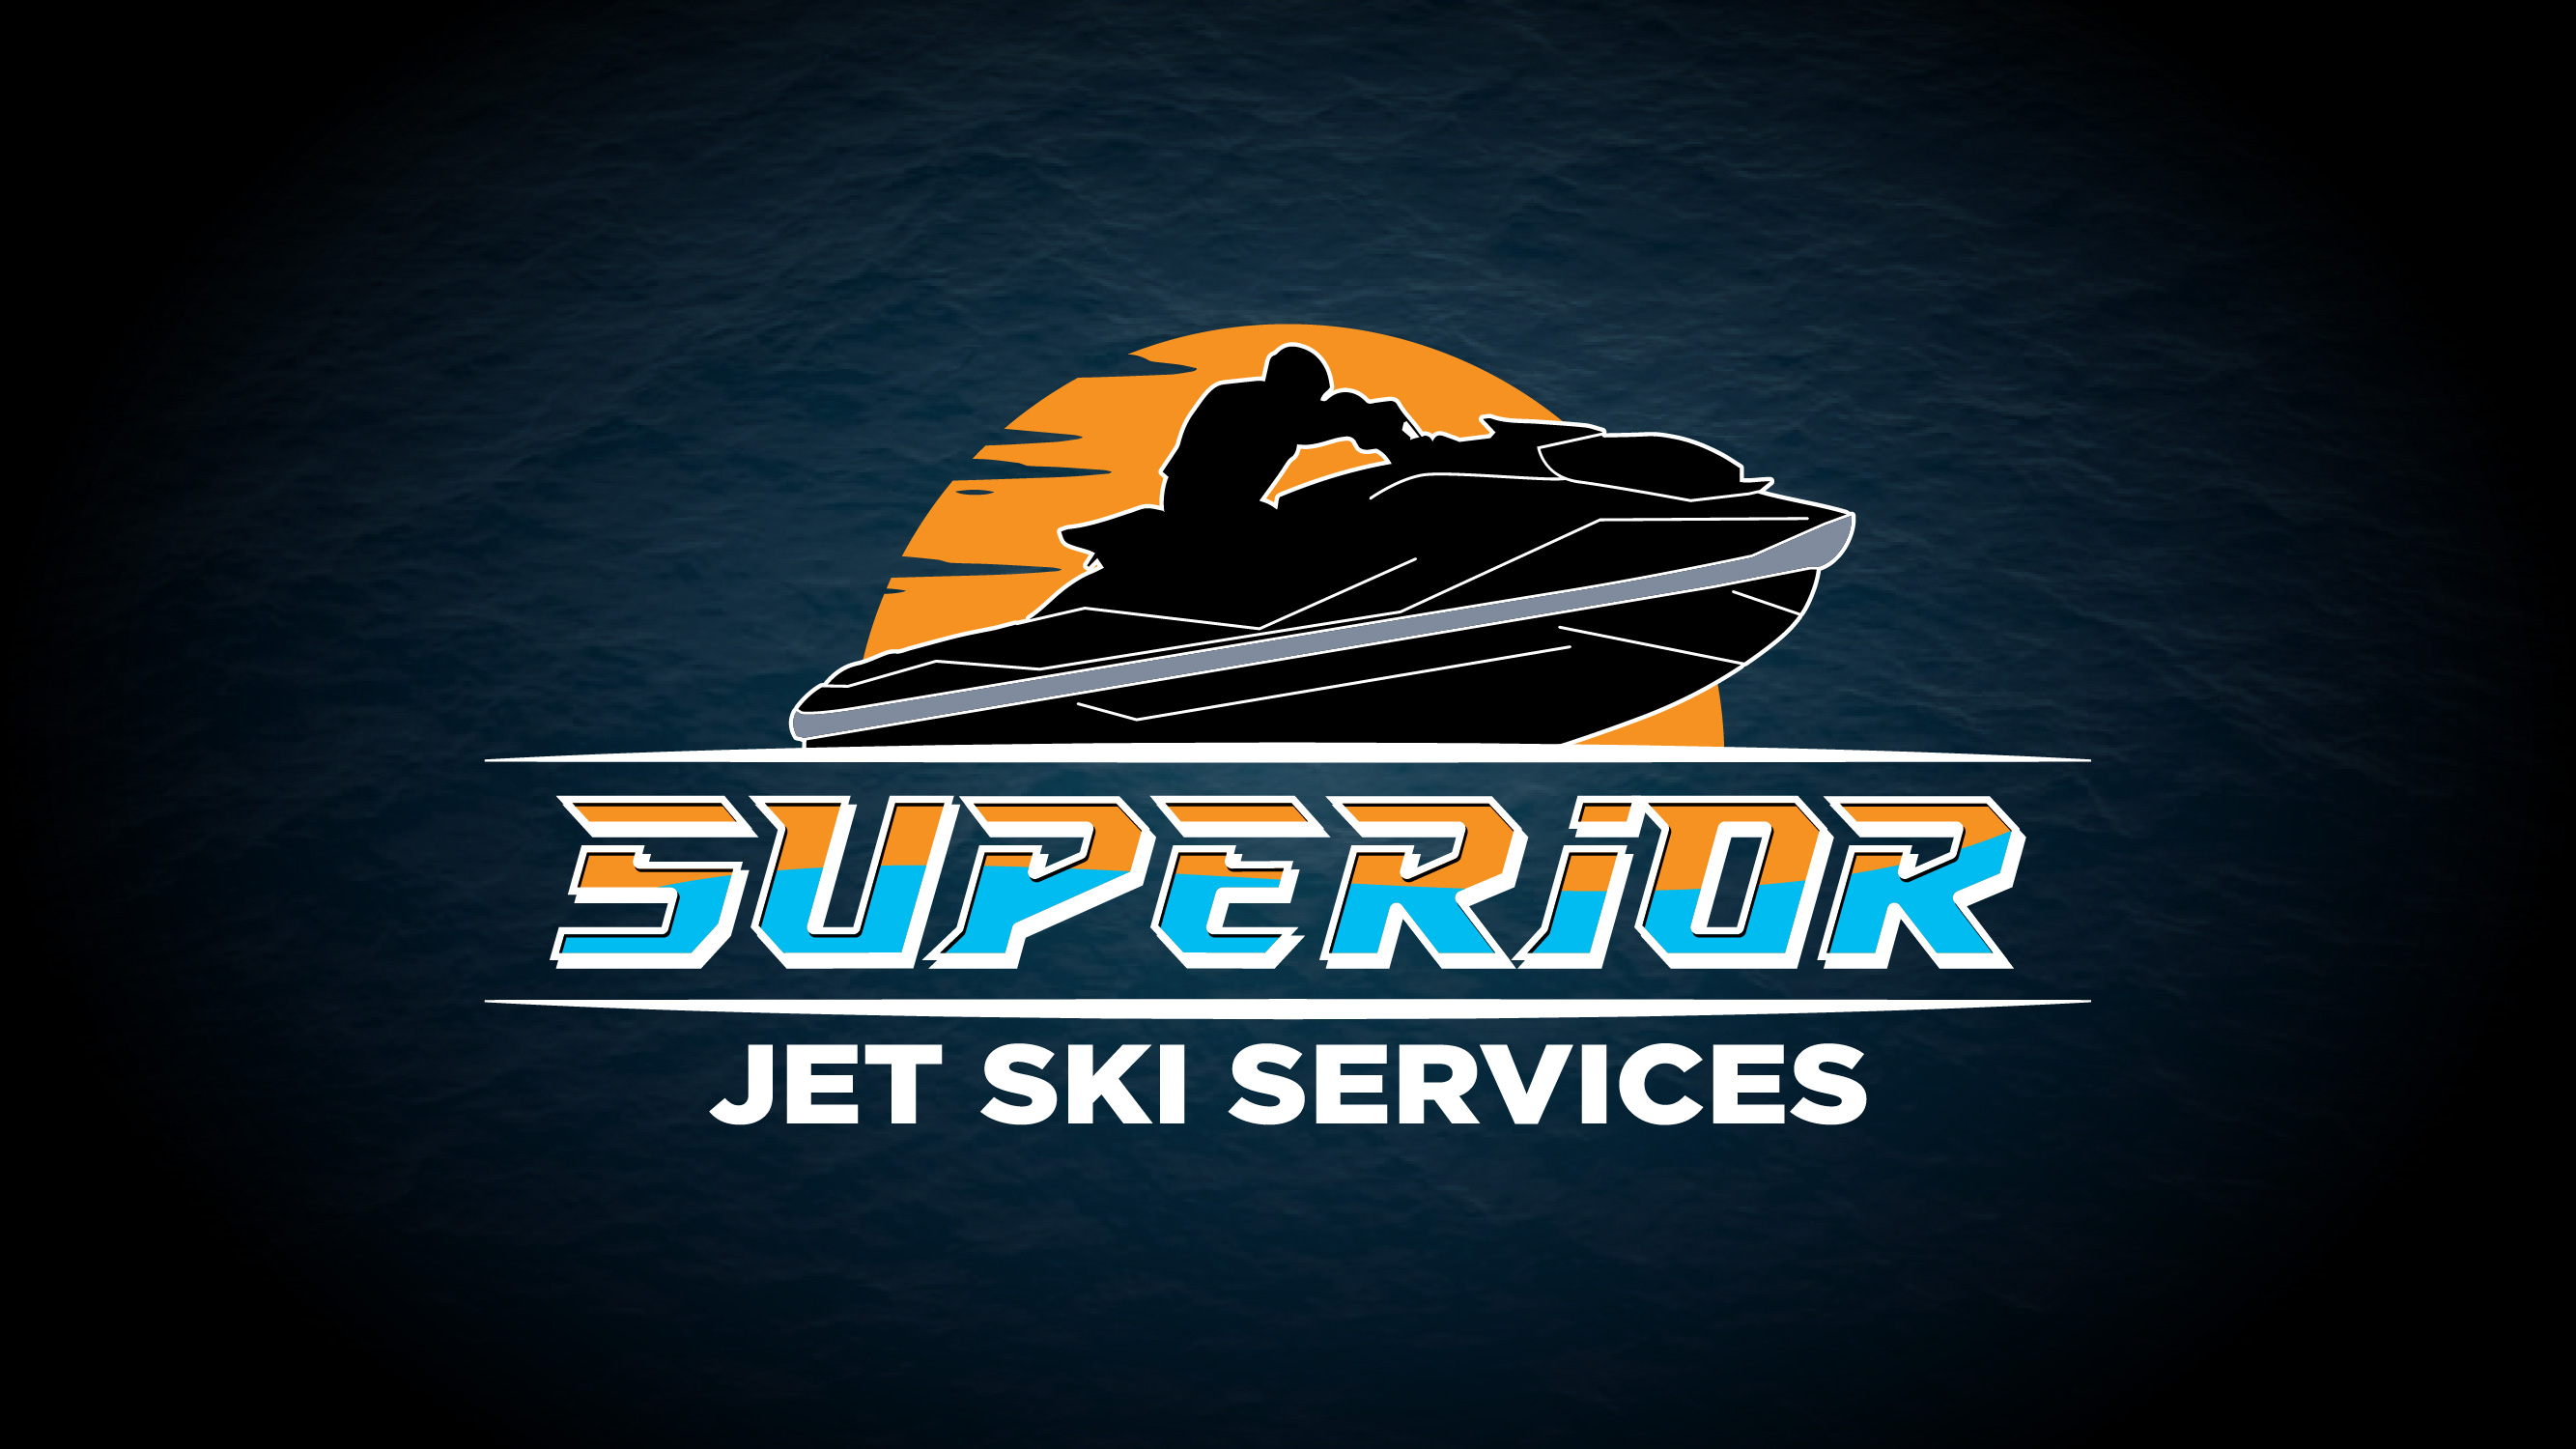 Superior Jet Ski Services_Facebook Cover-01